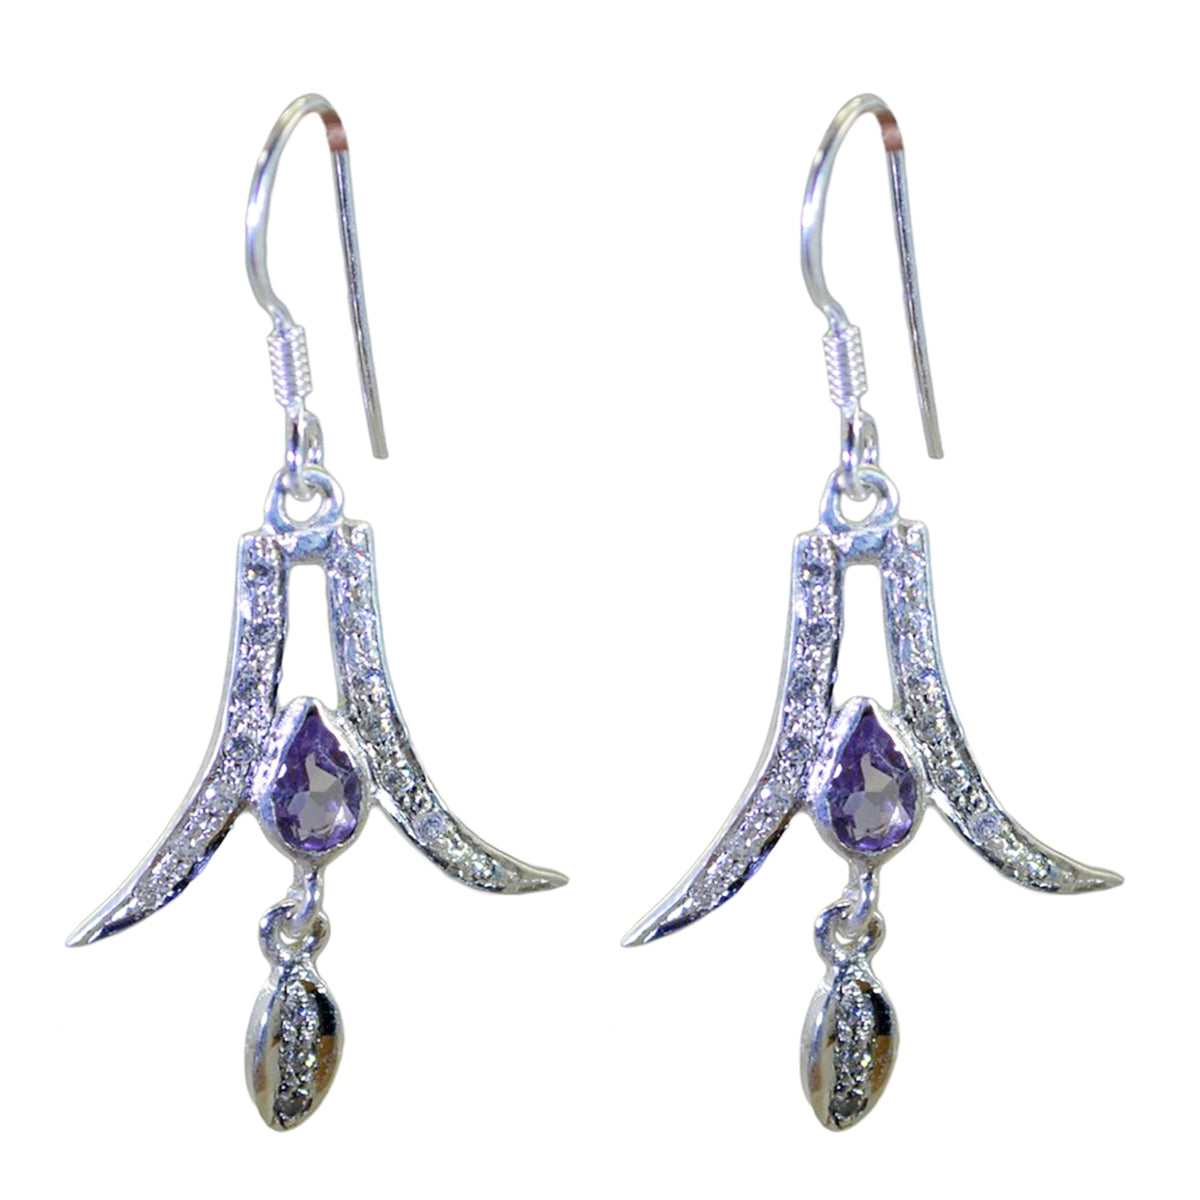 Riyo Genuine Gems pear Faceted Purple Amethyst Silver Earrings gift fordaughter day